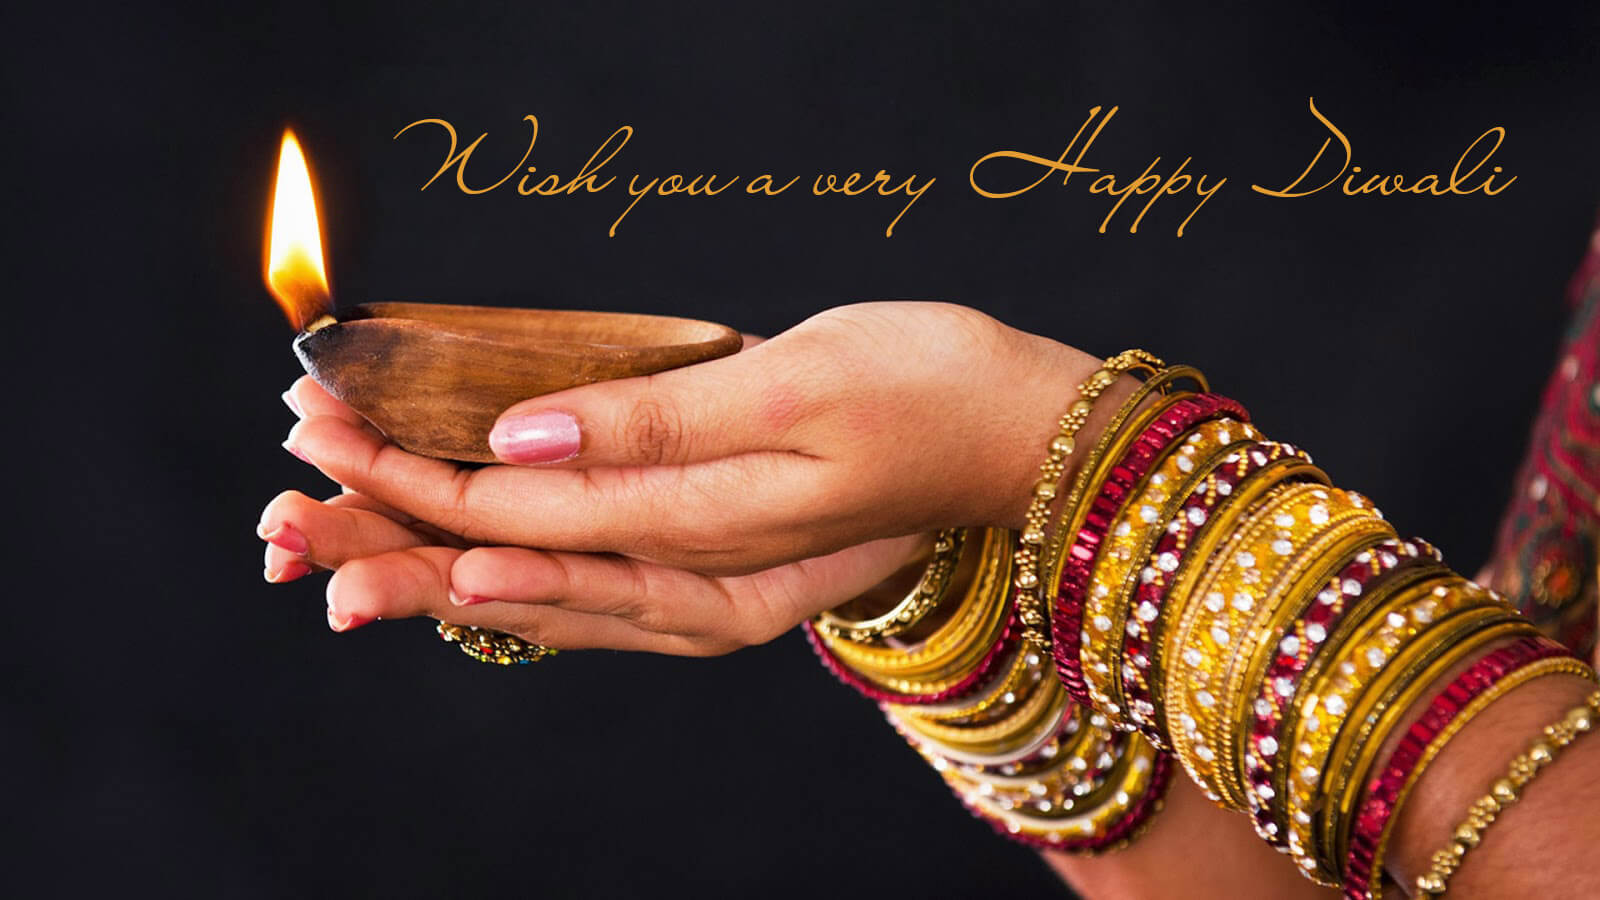 Download-Happy-Diwali-2015-HD-Wallpapers-facebook-mobile-desktop-cgfrog-30